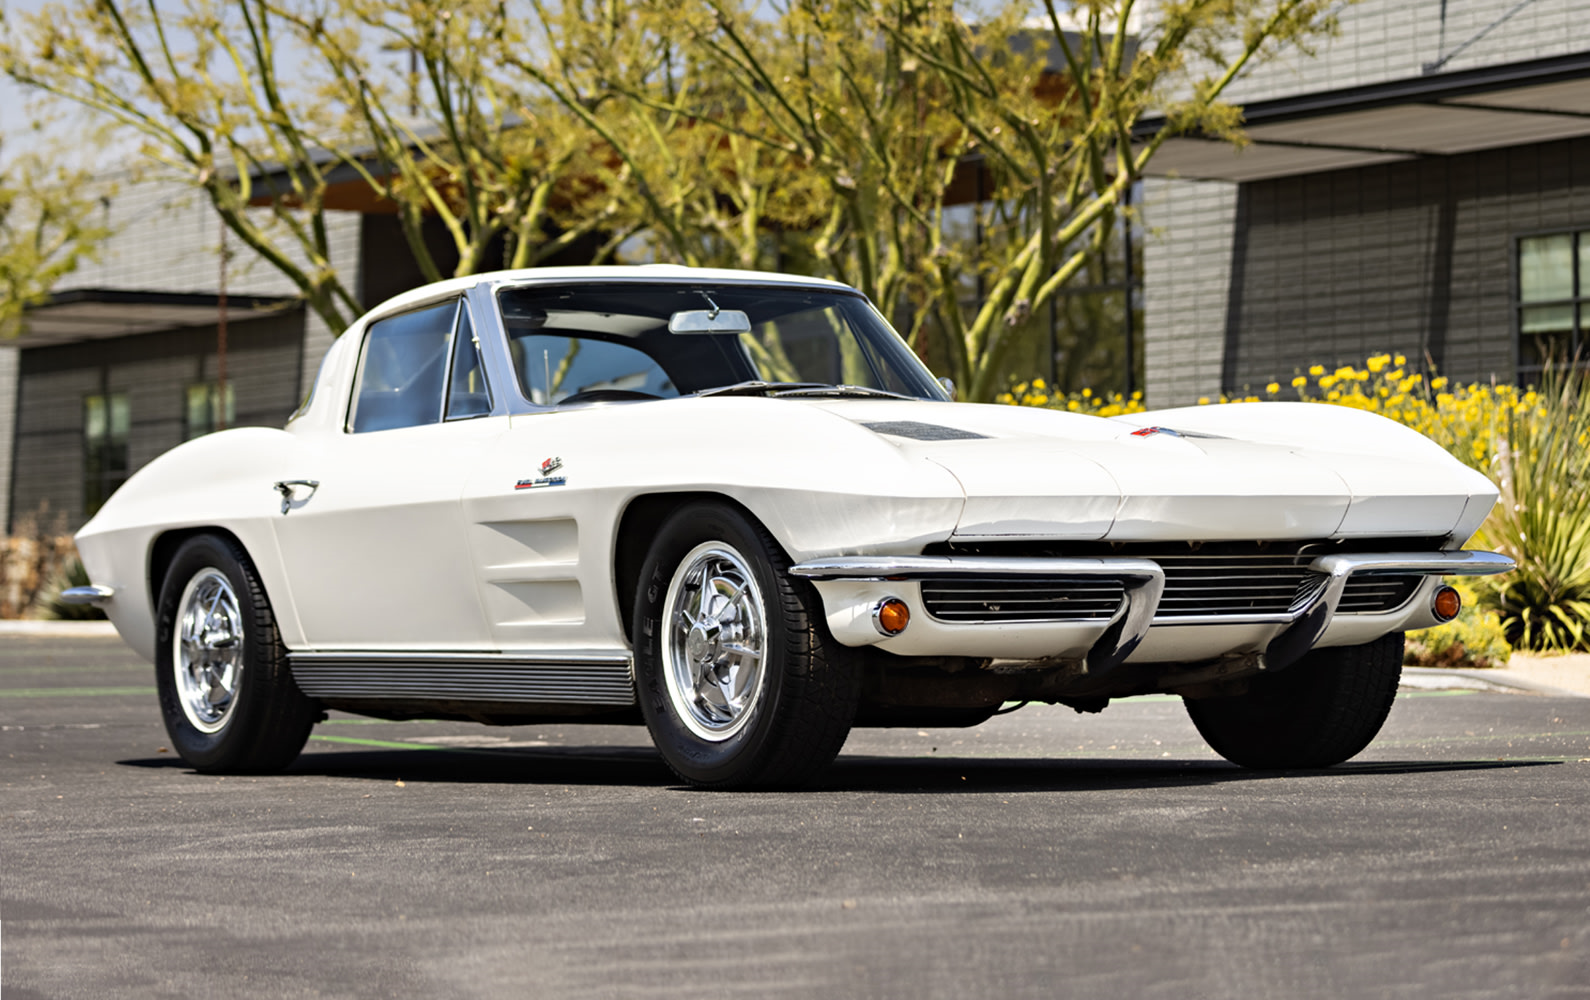 Corvette Of The Day: 1963 STING RAY "SPLIT-WINDOW"